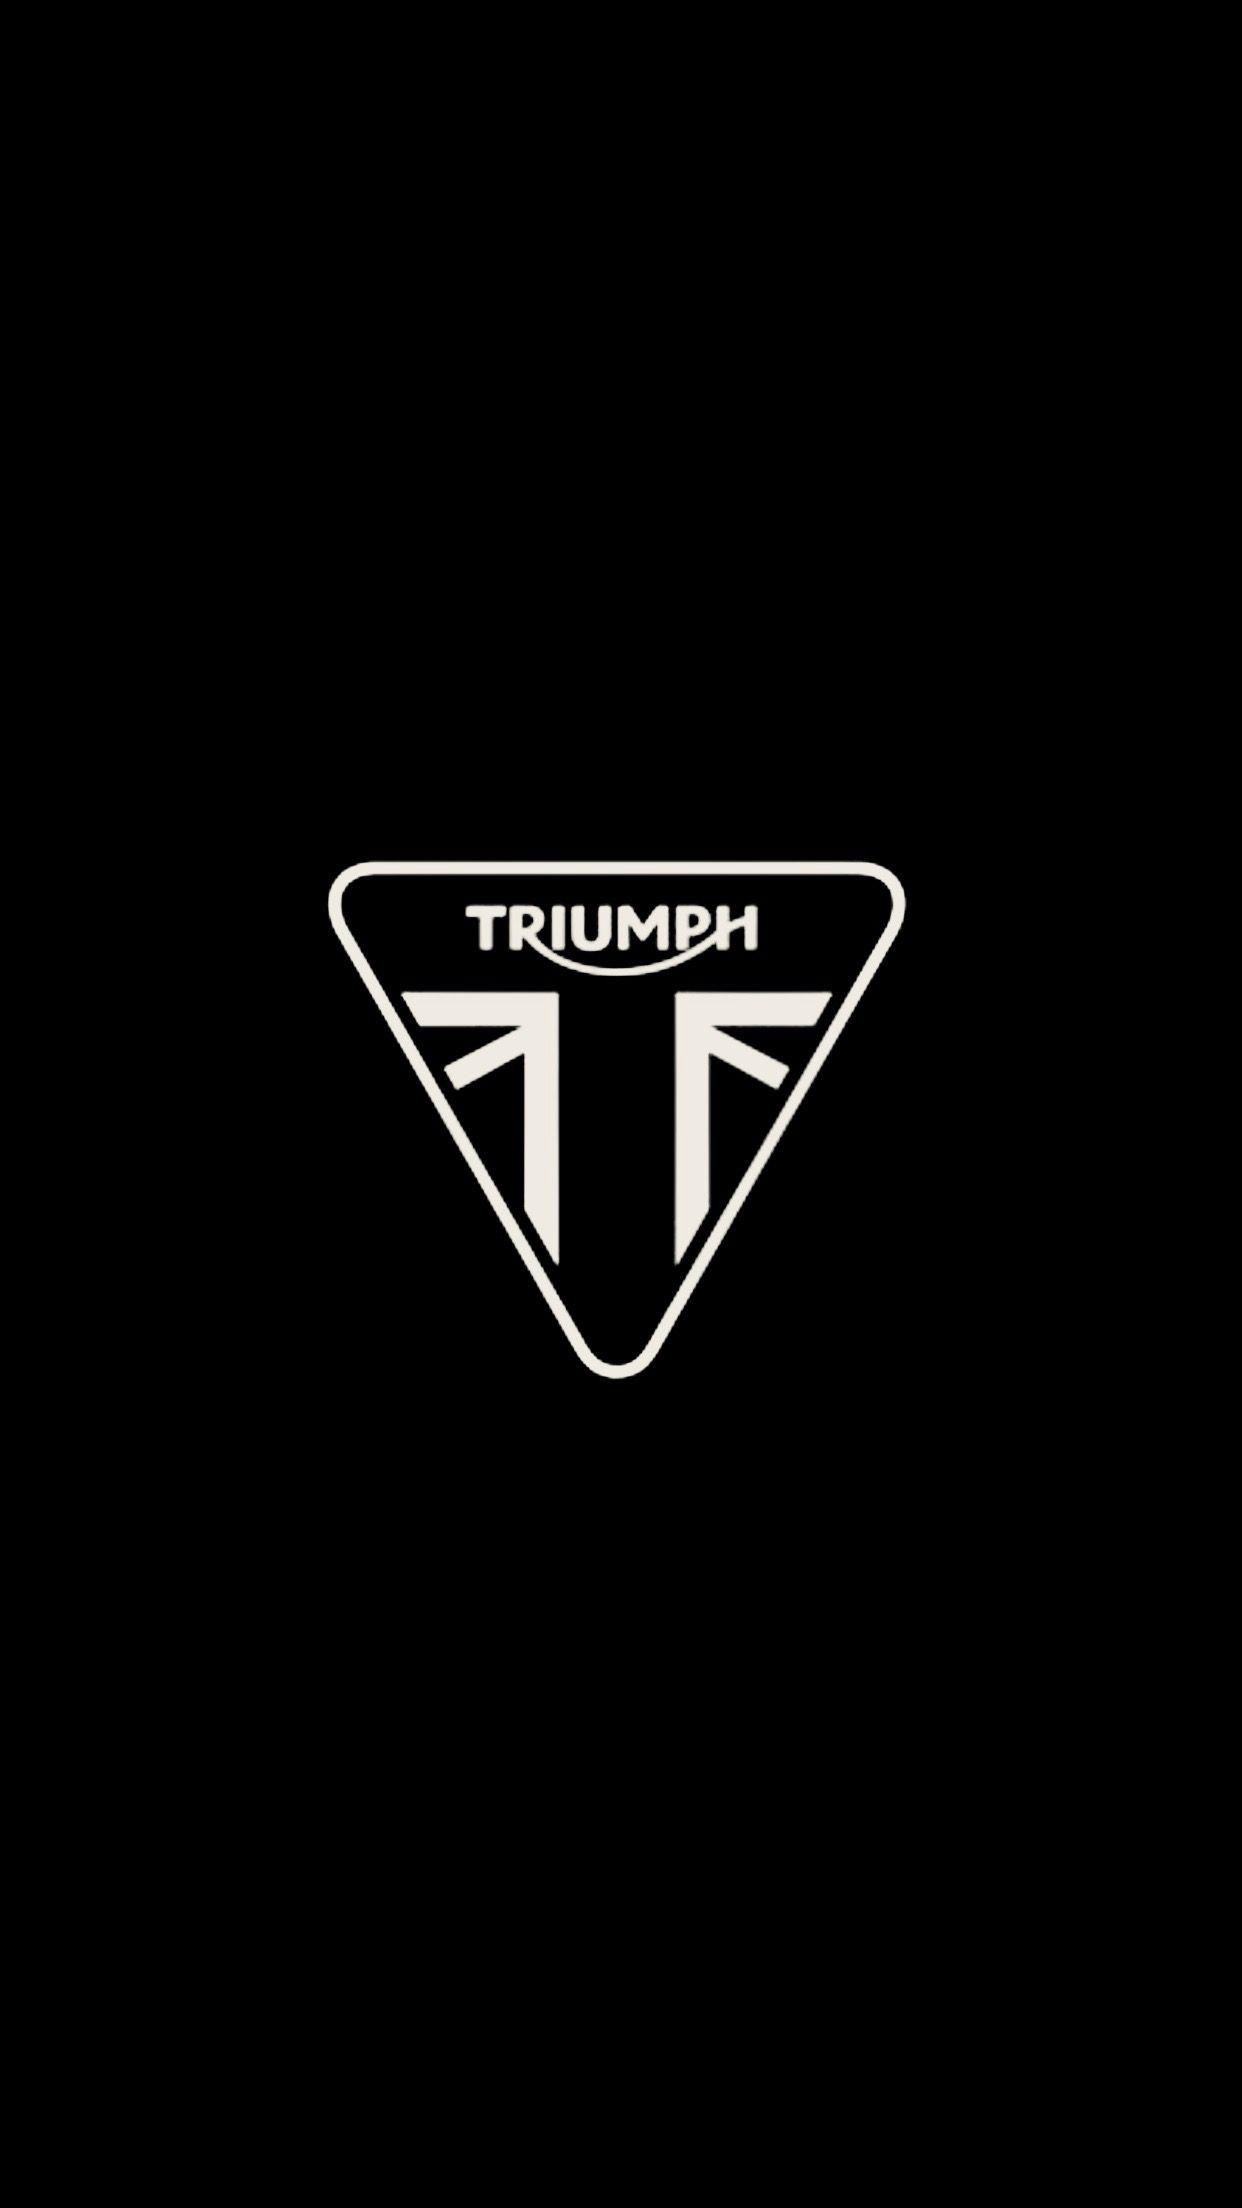 Triumph LOGO # Wallpaper. Triumph motorcycles, Motorcycle logo